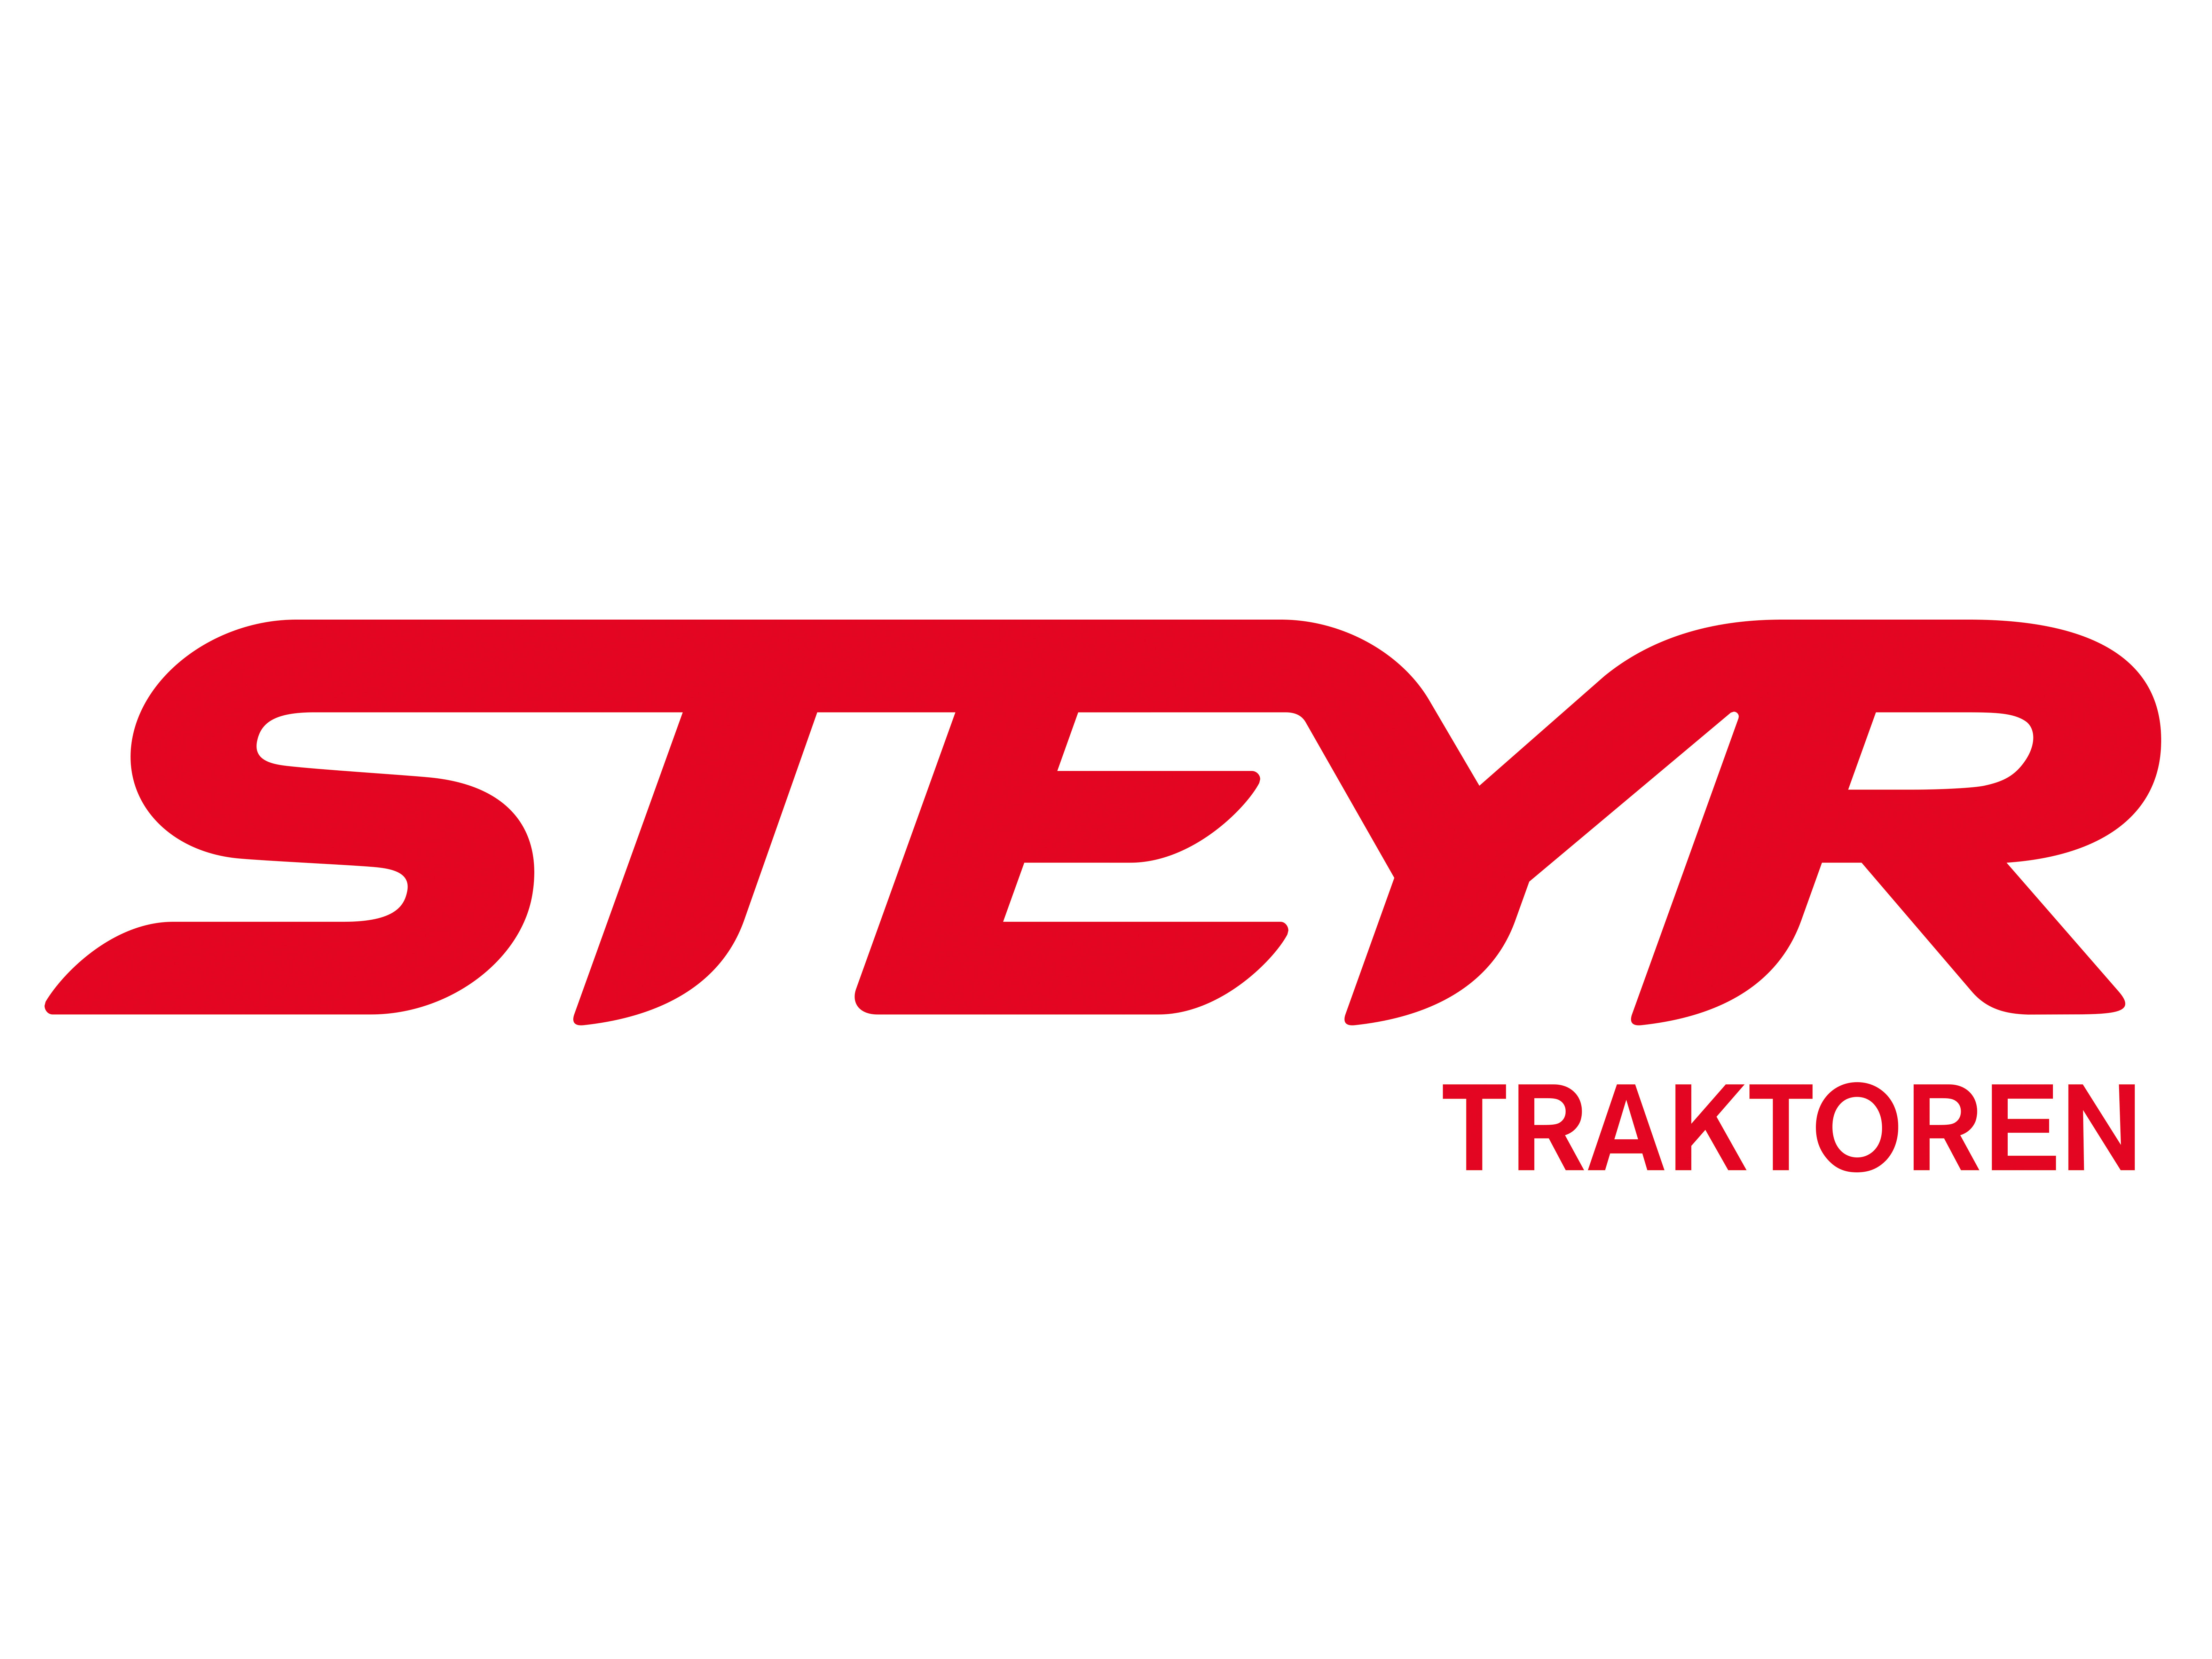 Steyr logo 2014